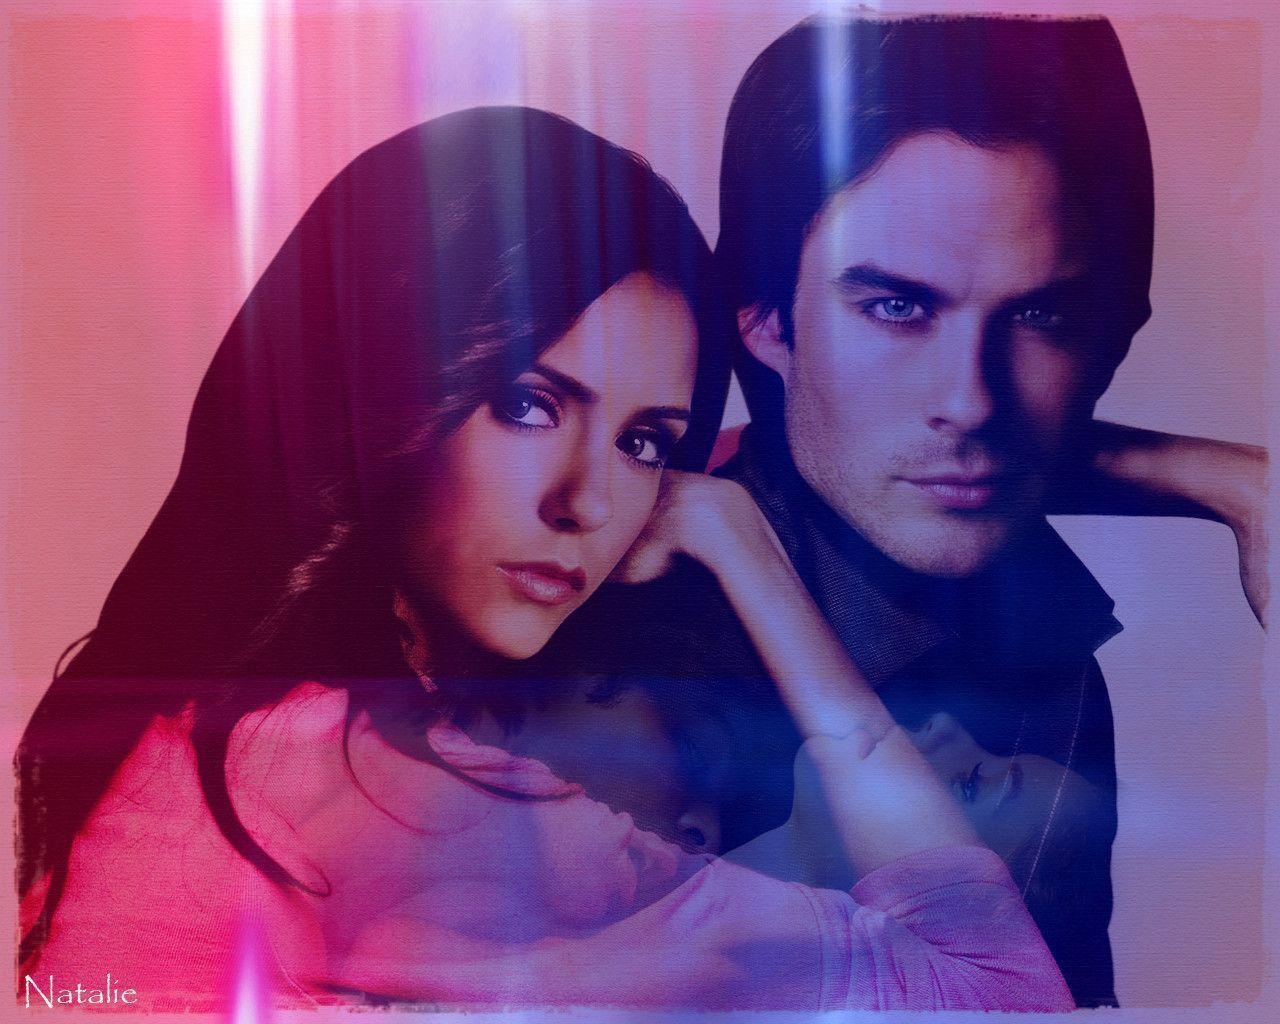 Elena & Damon Vampire Diaries Wallpaper